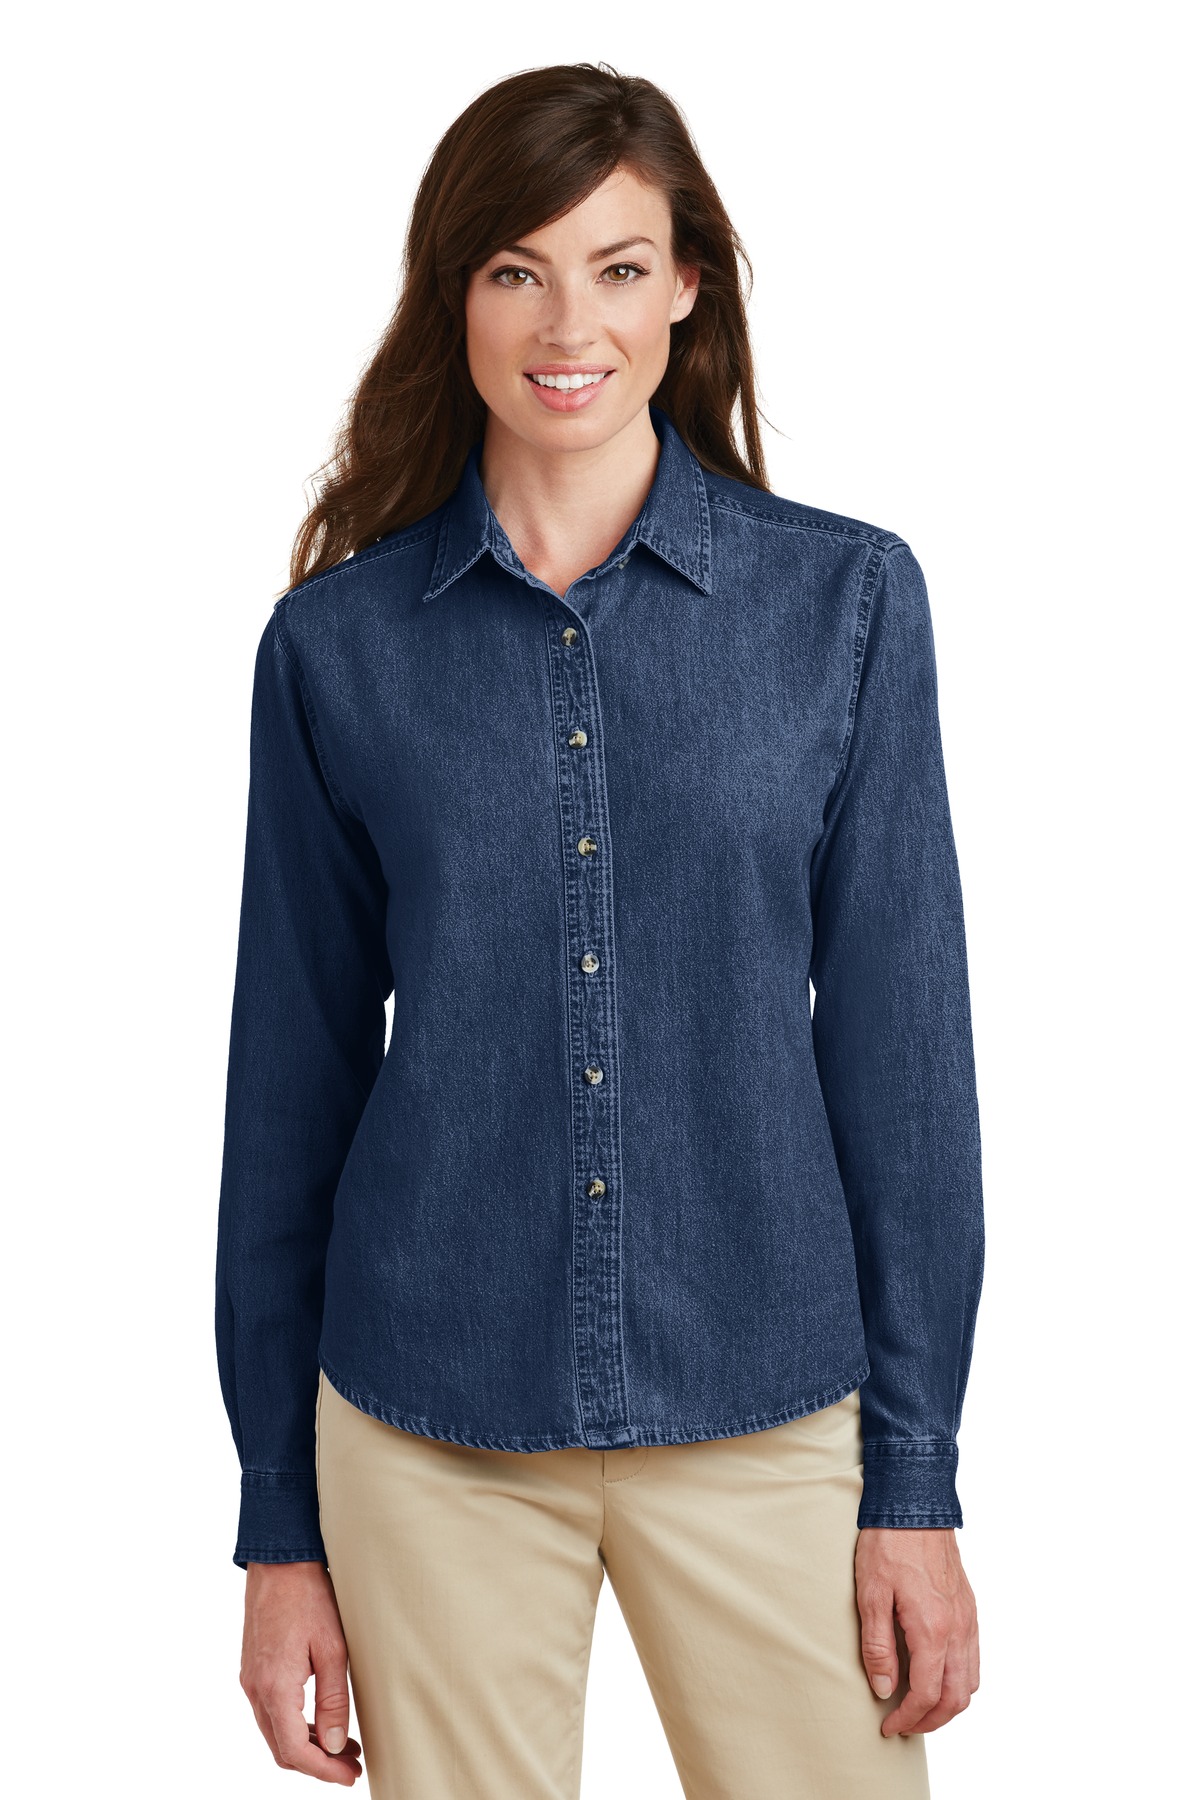 Port & Company - Ladies Long Sleeve Value Denim Shirt.  LSP10